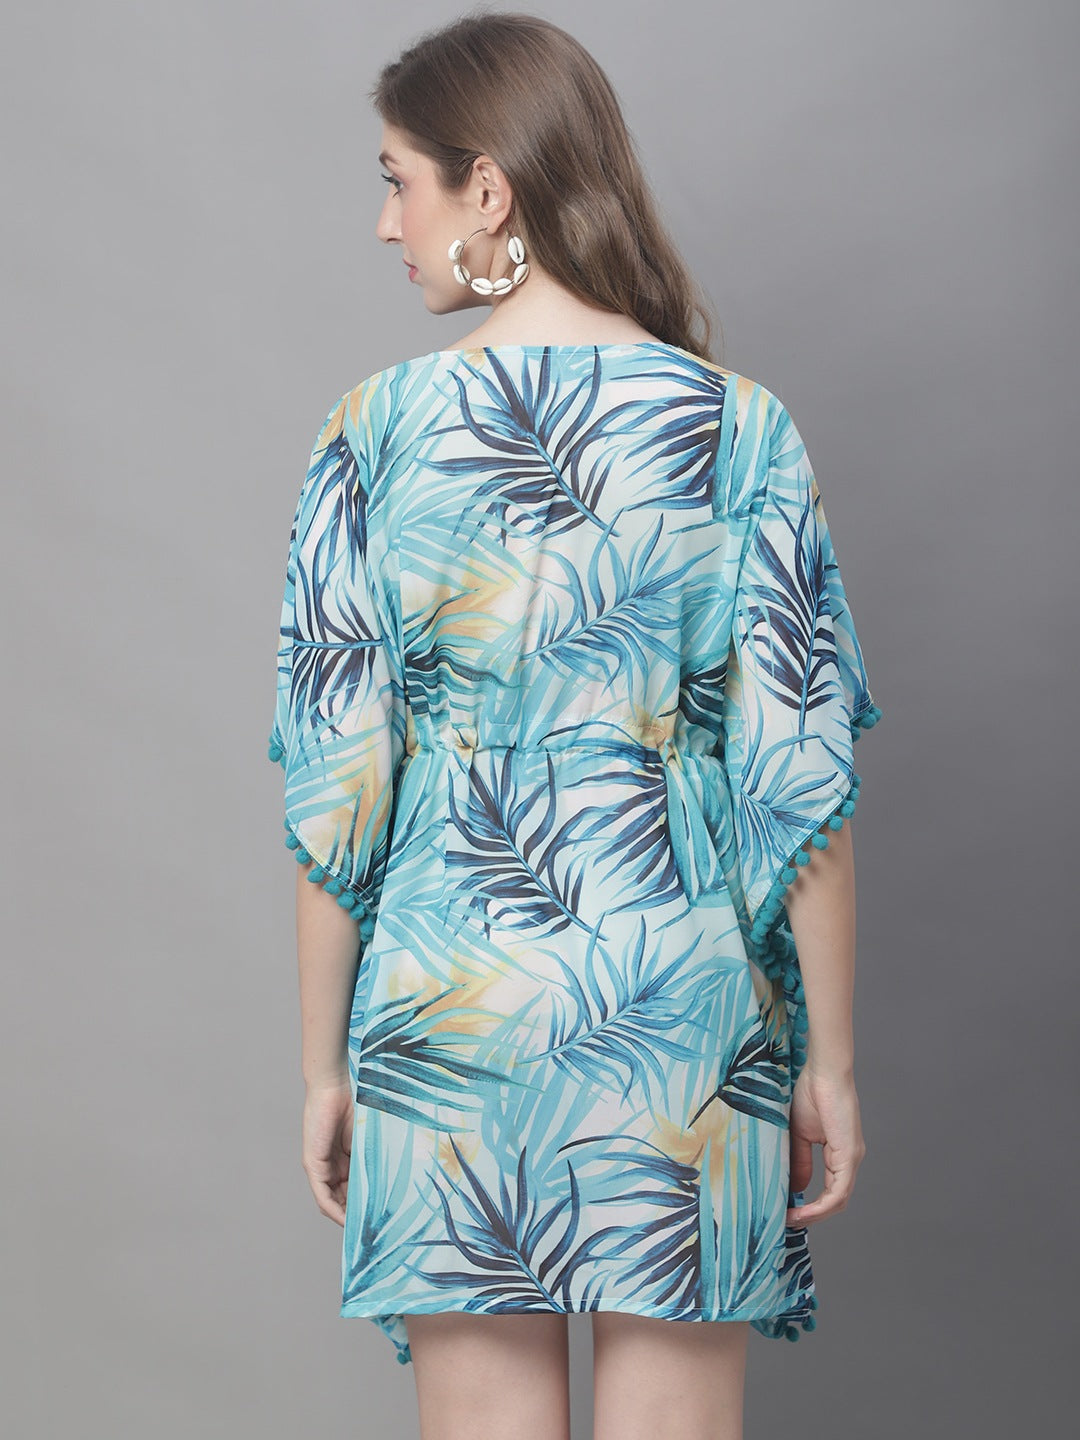 Sky Blue Color Tropical Printed Georgette Coverup Beachwear Kaftan For Woman Claura Designs Pvt. Ltd. Kaftan Beachwear, Coverup, Free Size, kaftan, kaftan_freesize, sky blue, Swimwear